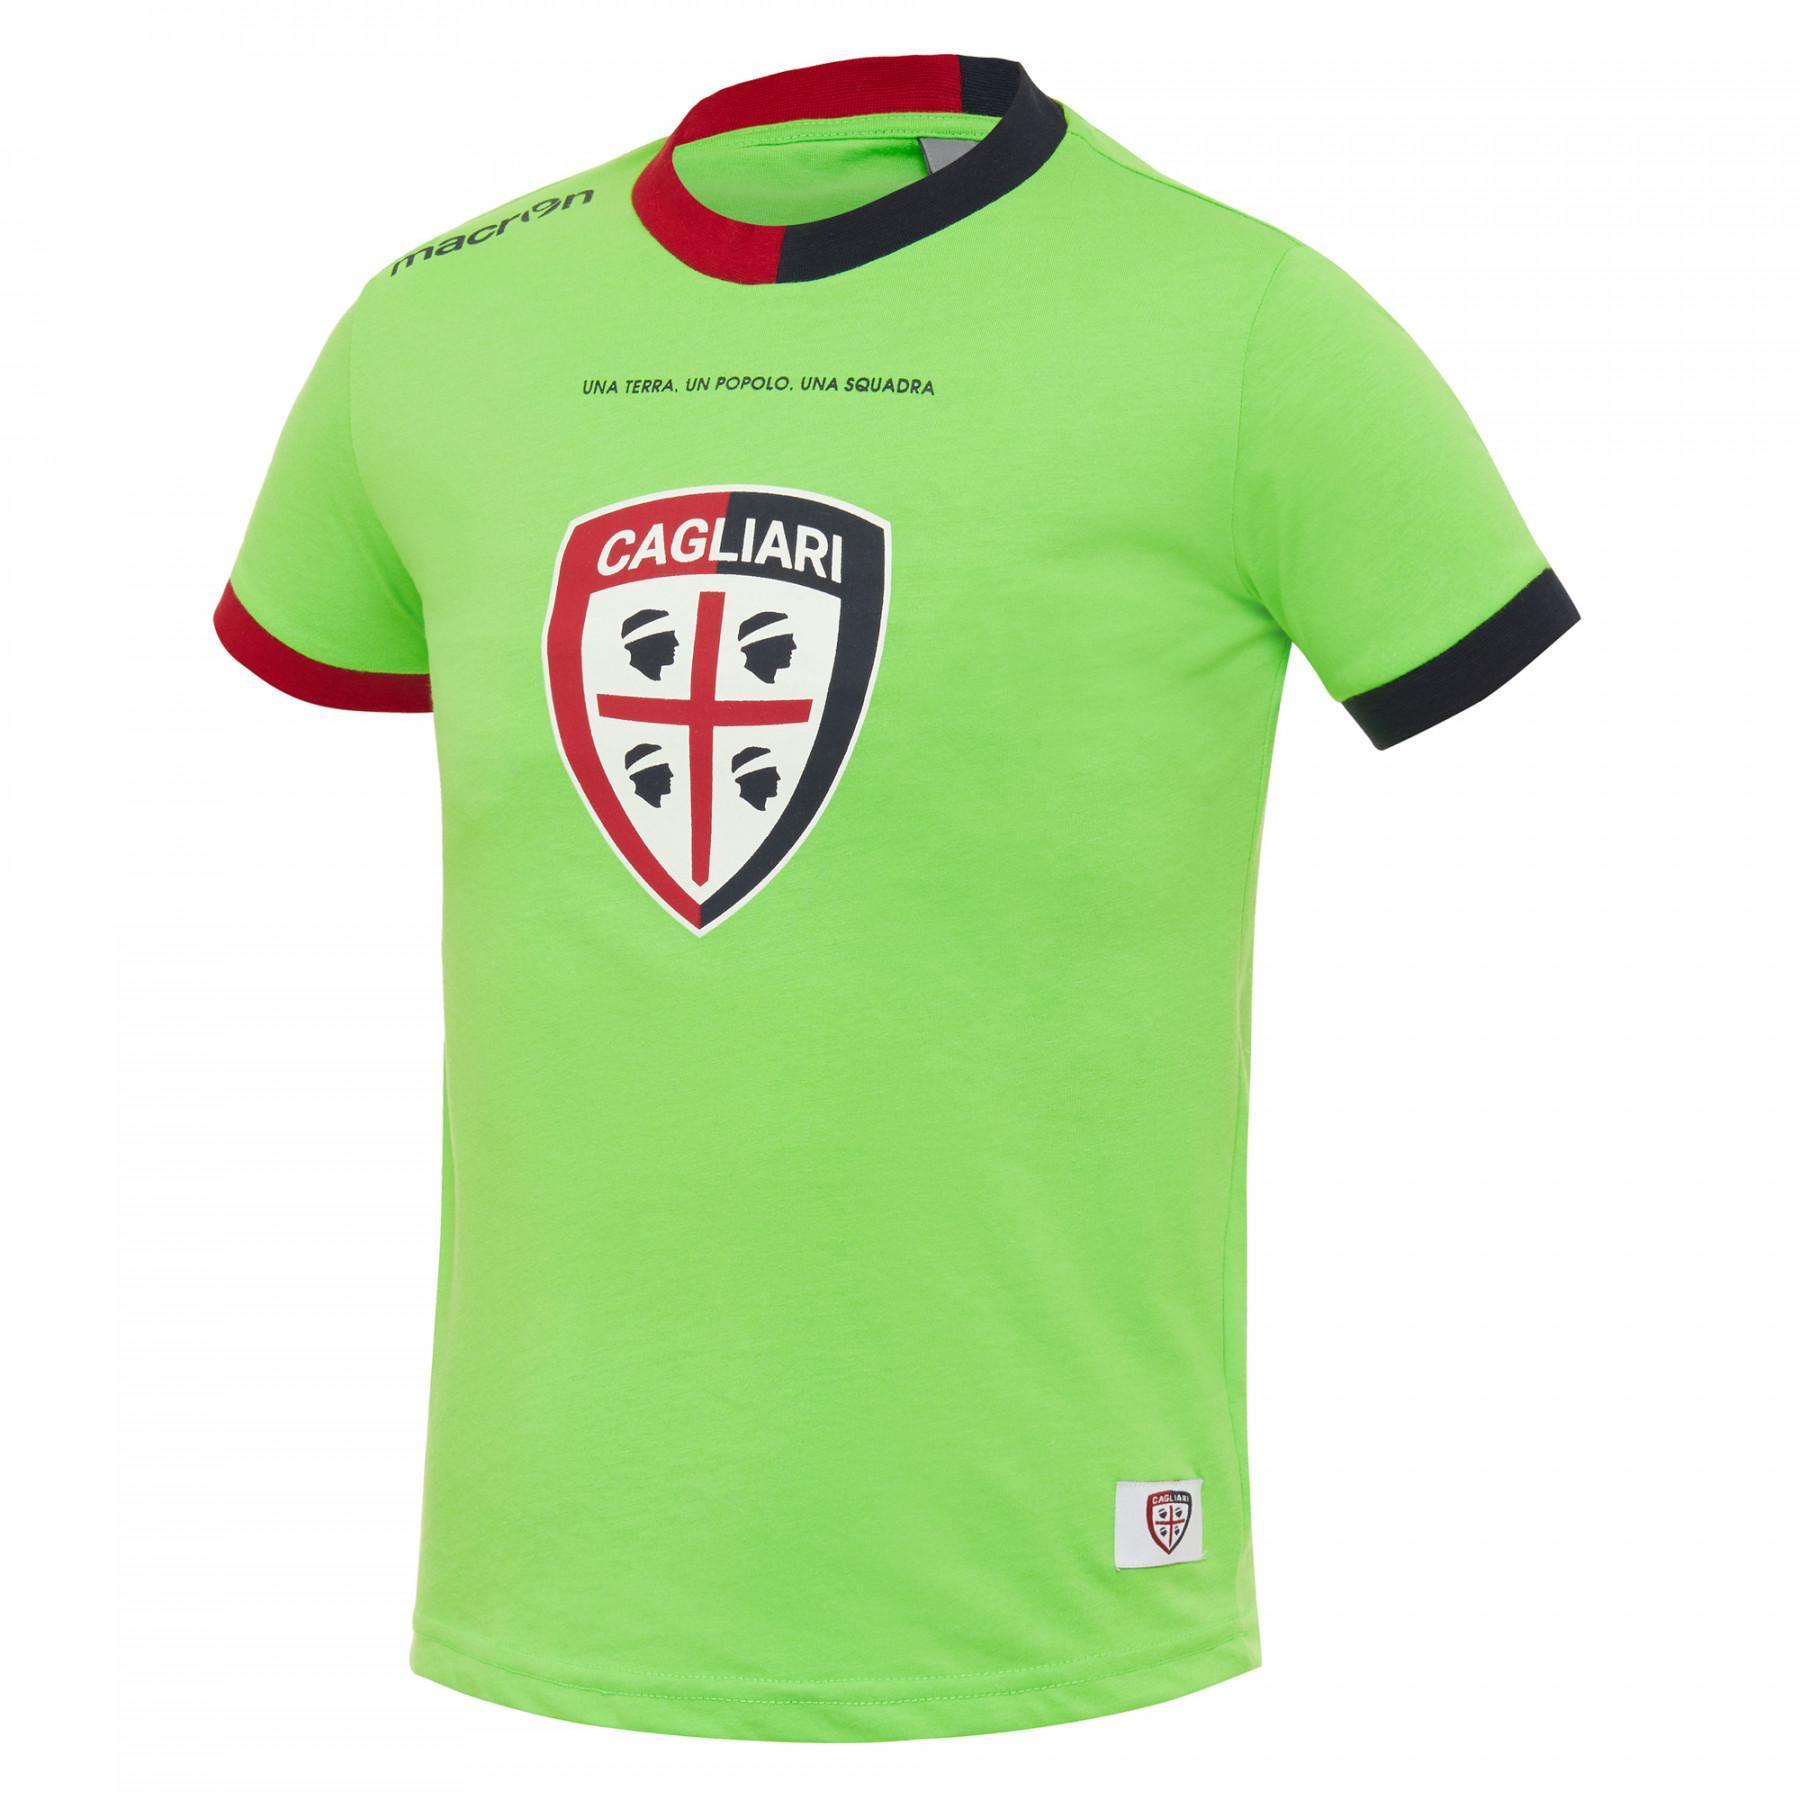 Kinder outdoor T-shirt Cagliari 2016-2017